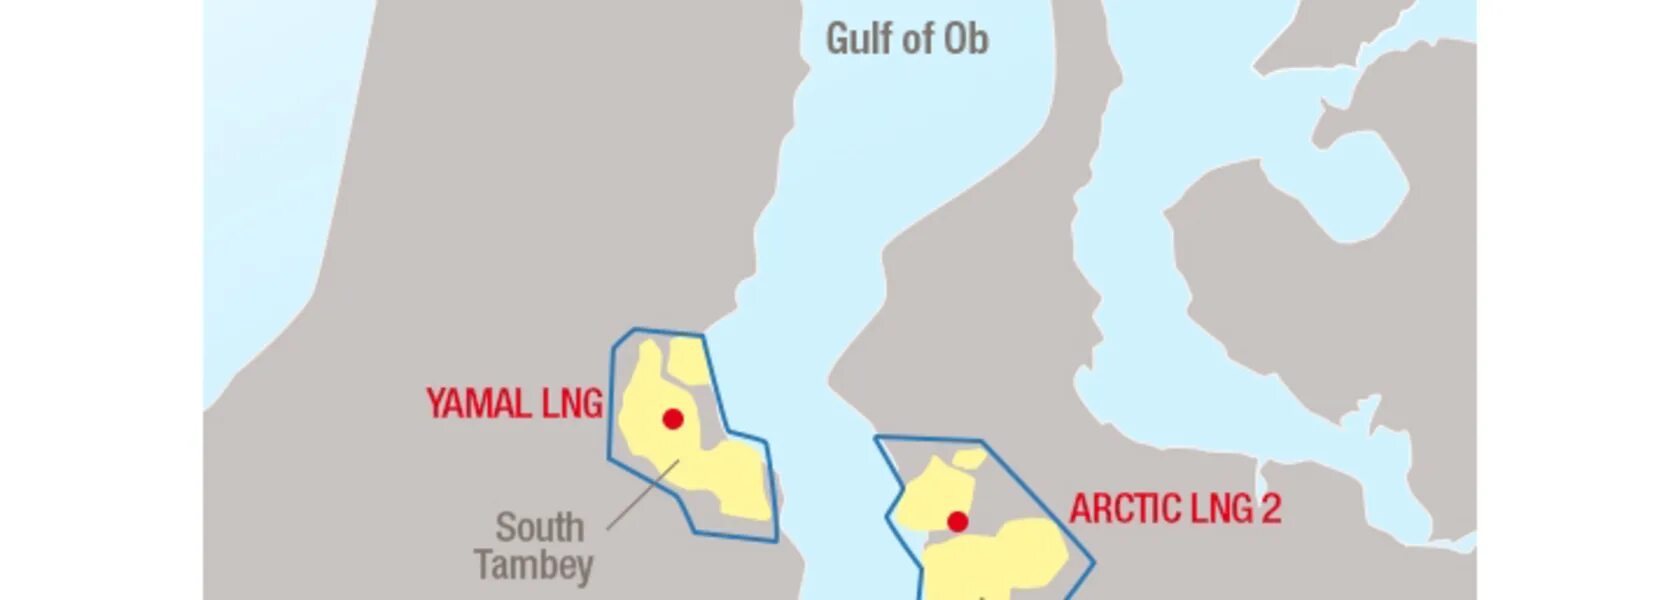 Карта спг 2. Арктик СПГ 2 на карте. Arctic LNG 2 логотип. Южный Тамбей на карте.